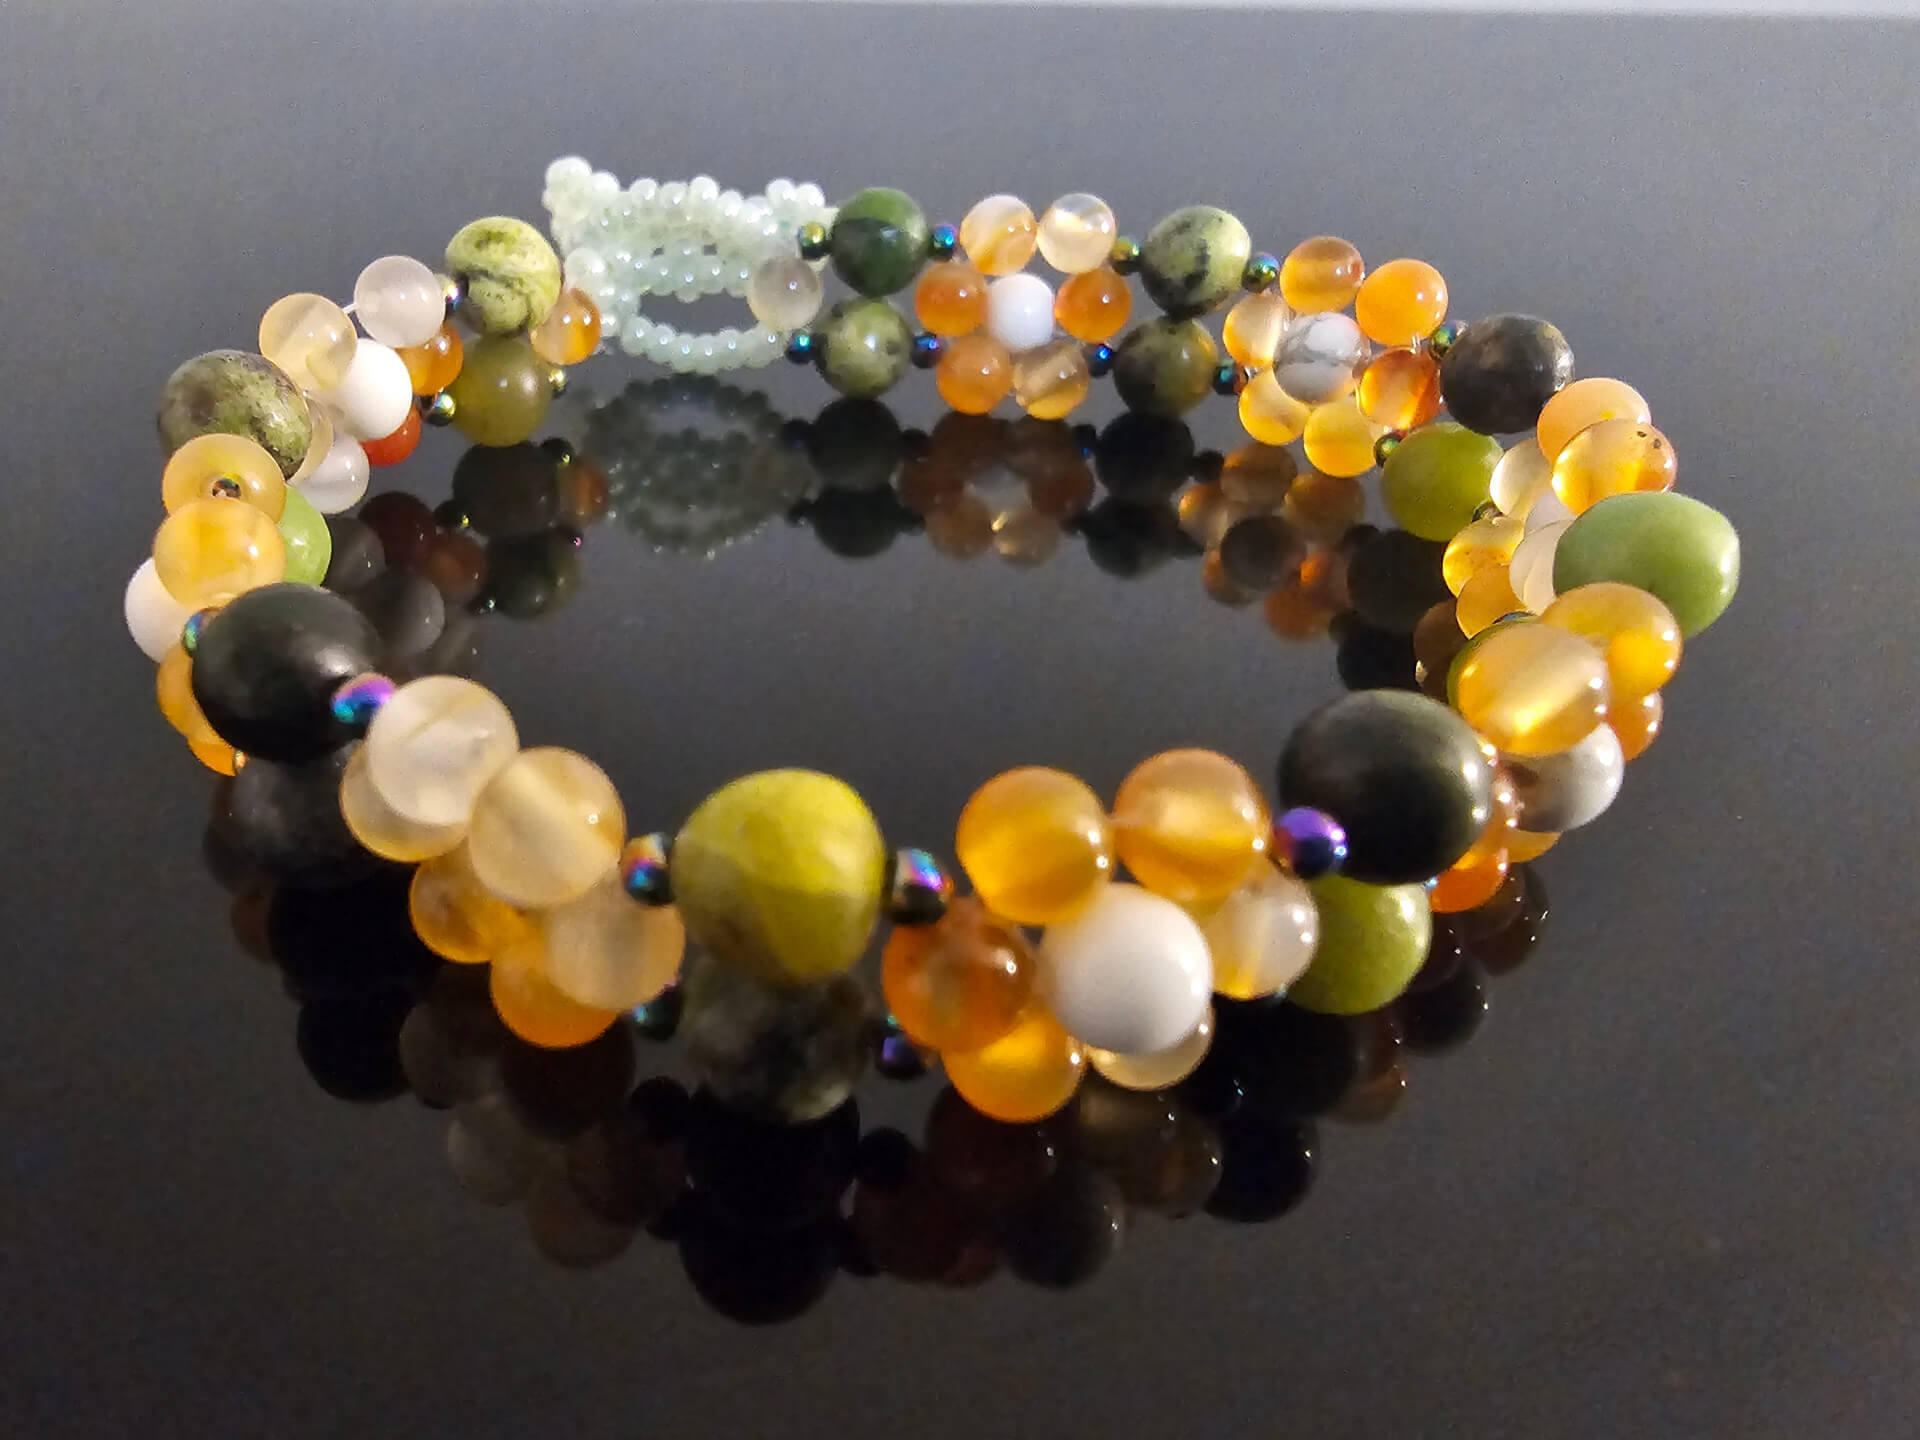 Flower of Life gemstone bracelet in a circle